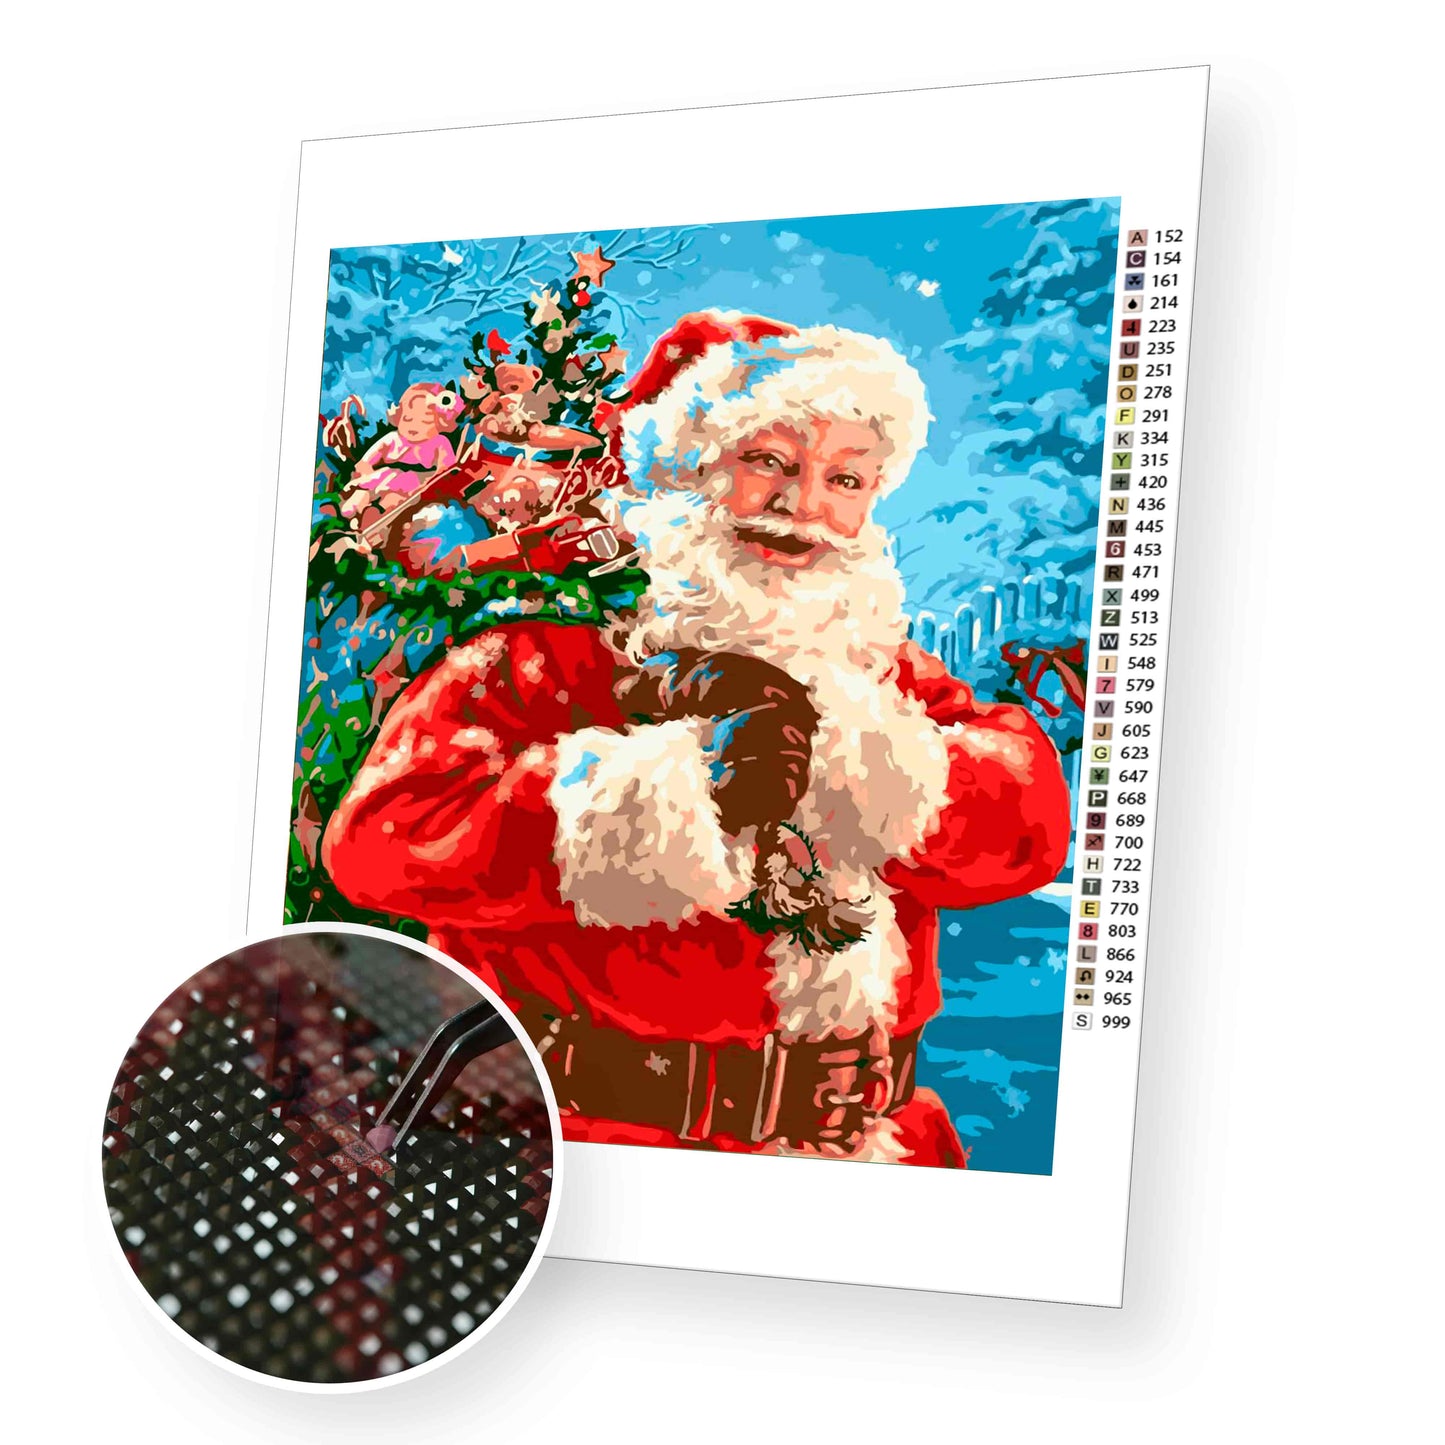 Santa Clause with Christmas Gifts - Diamond Painting Kit